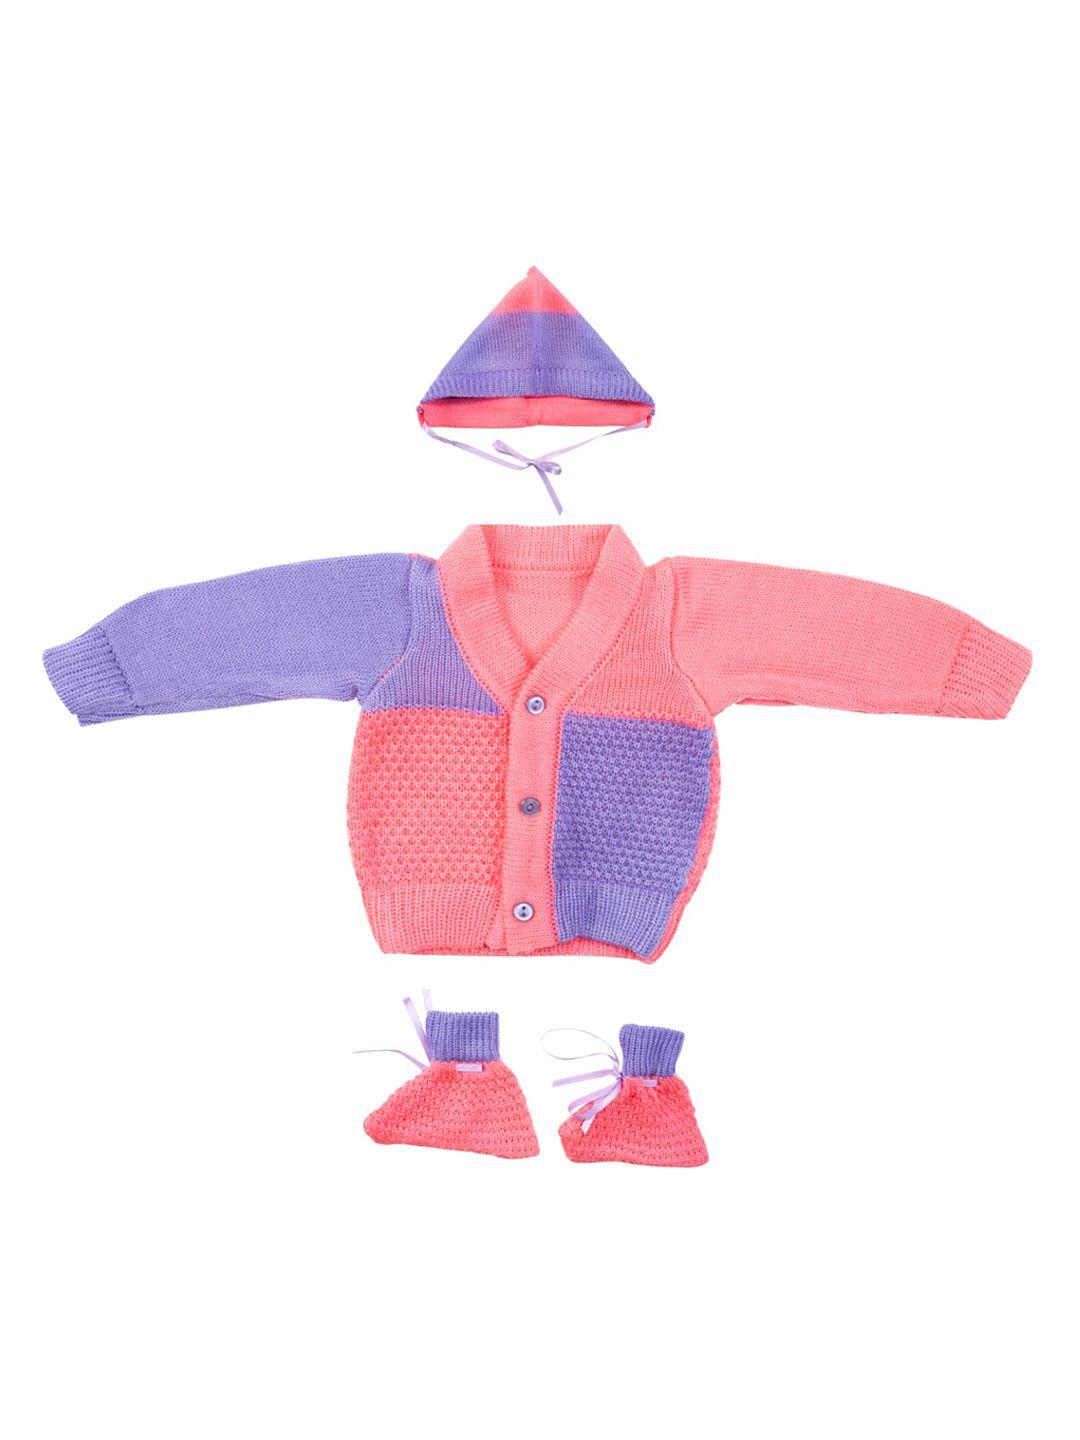 meemee unisex kids pink colourblocked cardigan sweater